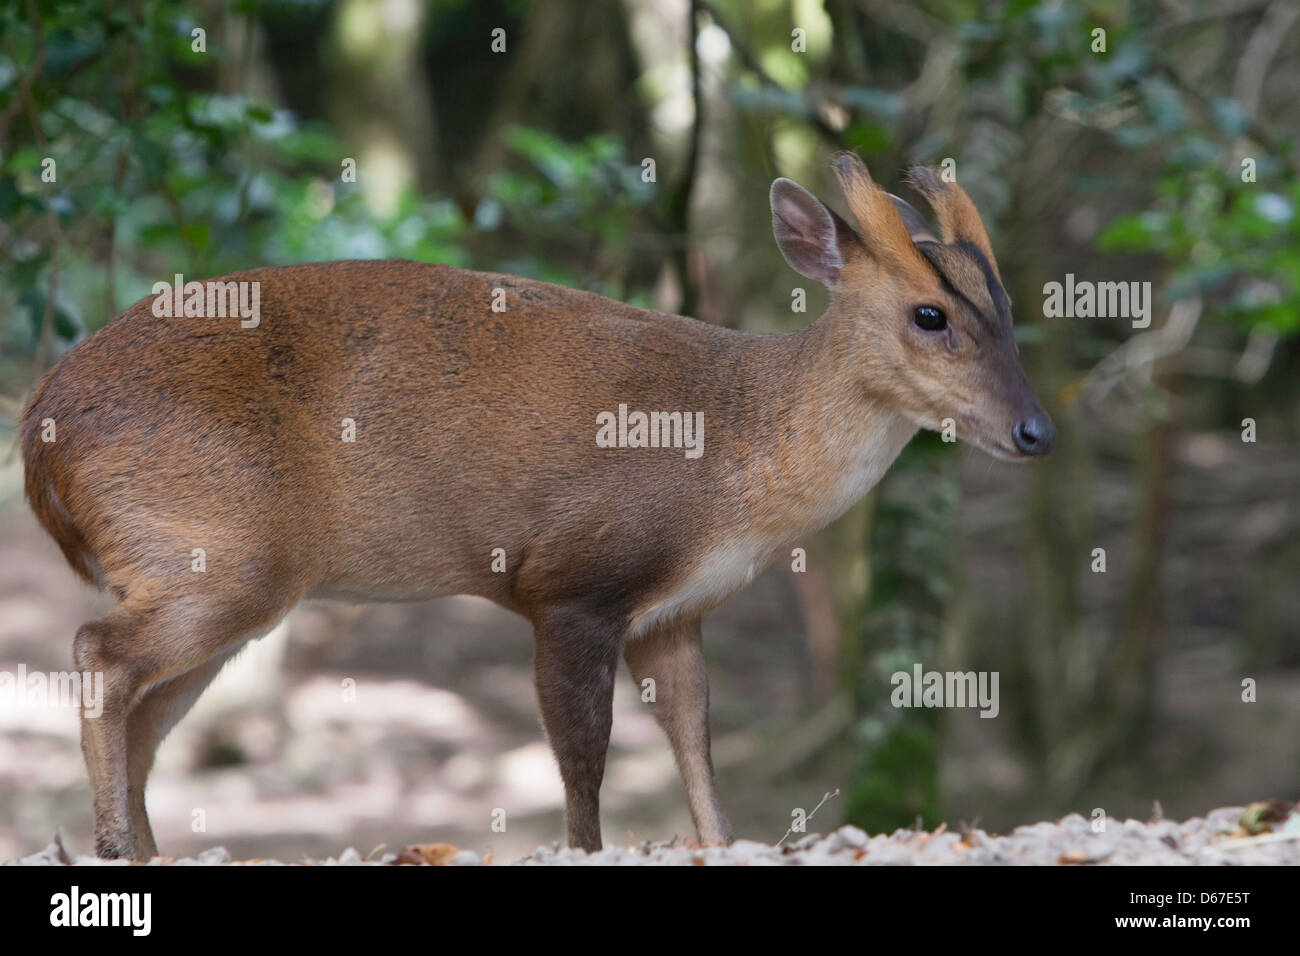 muntiacus muntjak - Muntjac deer standing in woodland Stock Photo